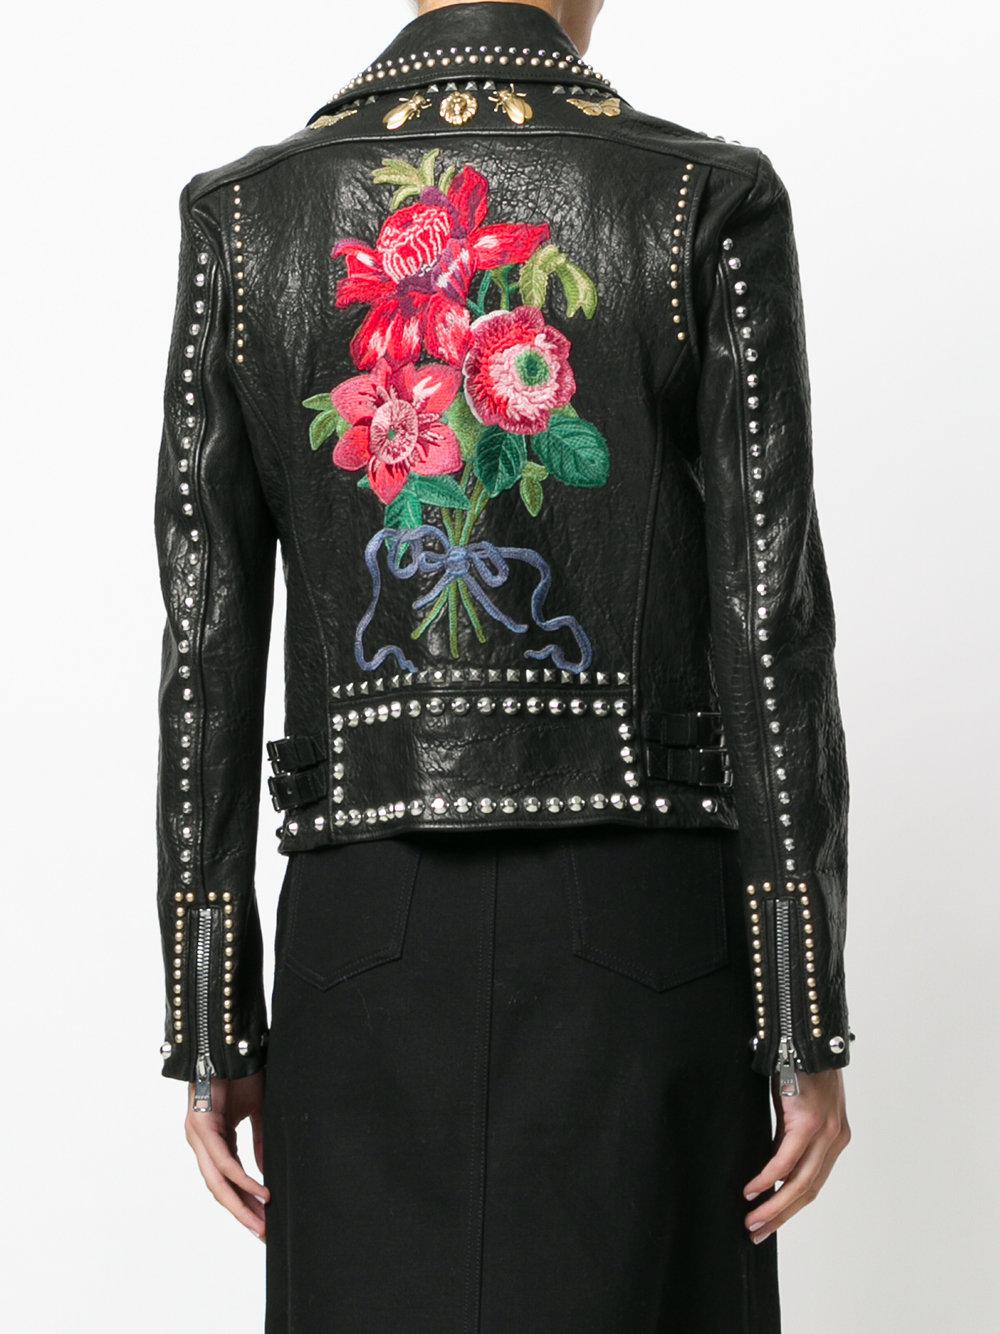 Gucci Leather Studded Biker Jacket in Black - Lyst